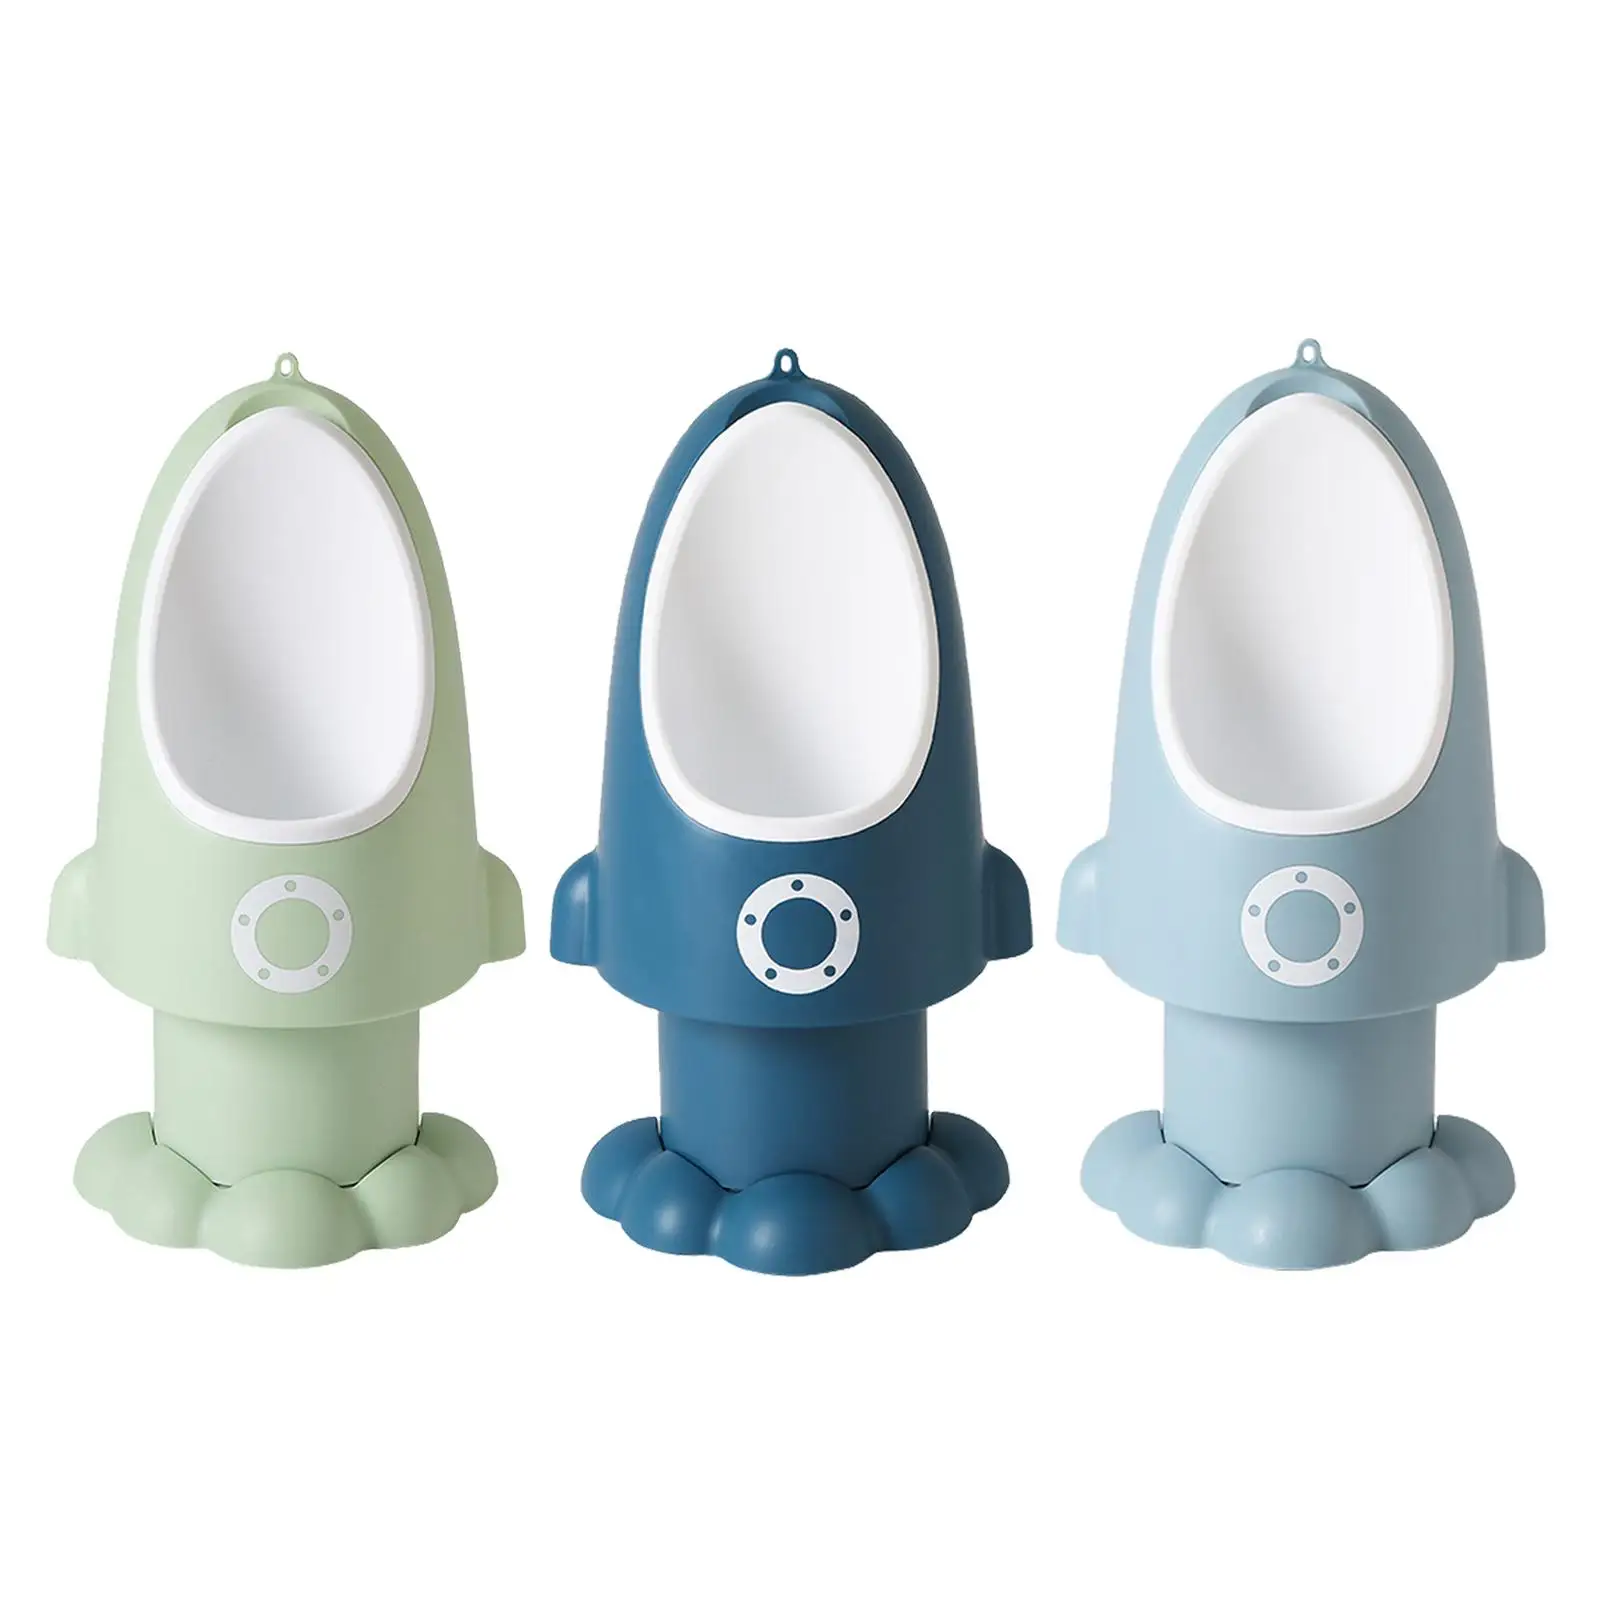 Rocket Shape Child Potty Urinal Toilet Pee Trainer Urinal Trainer Pee Training for Baby Kids Boys Toddler Children